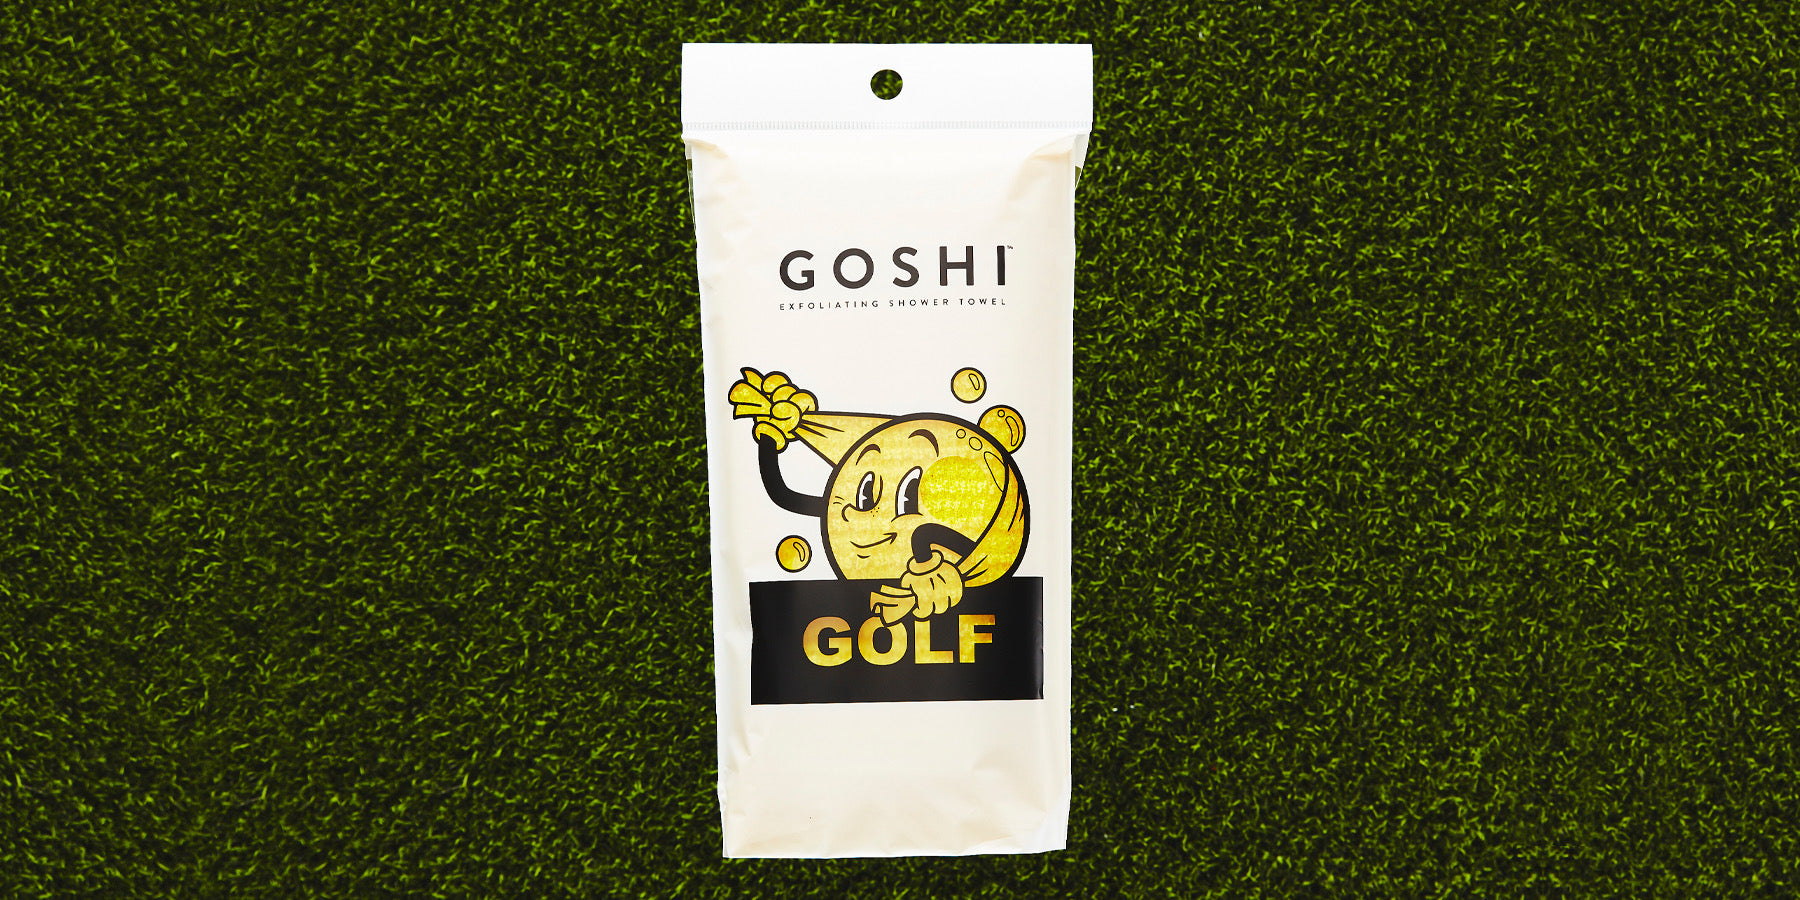 GOLF WANG – Golf Wang